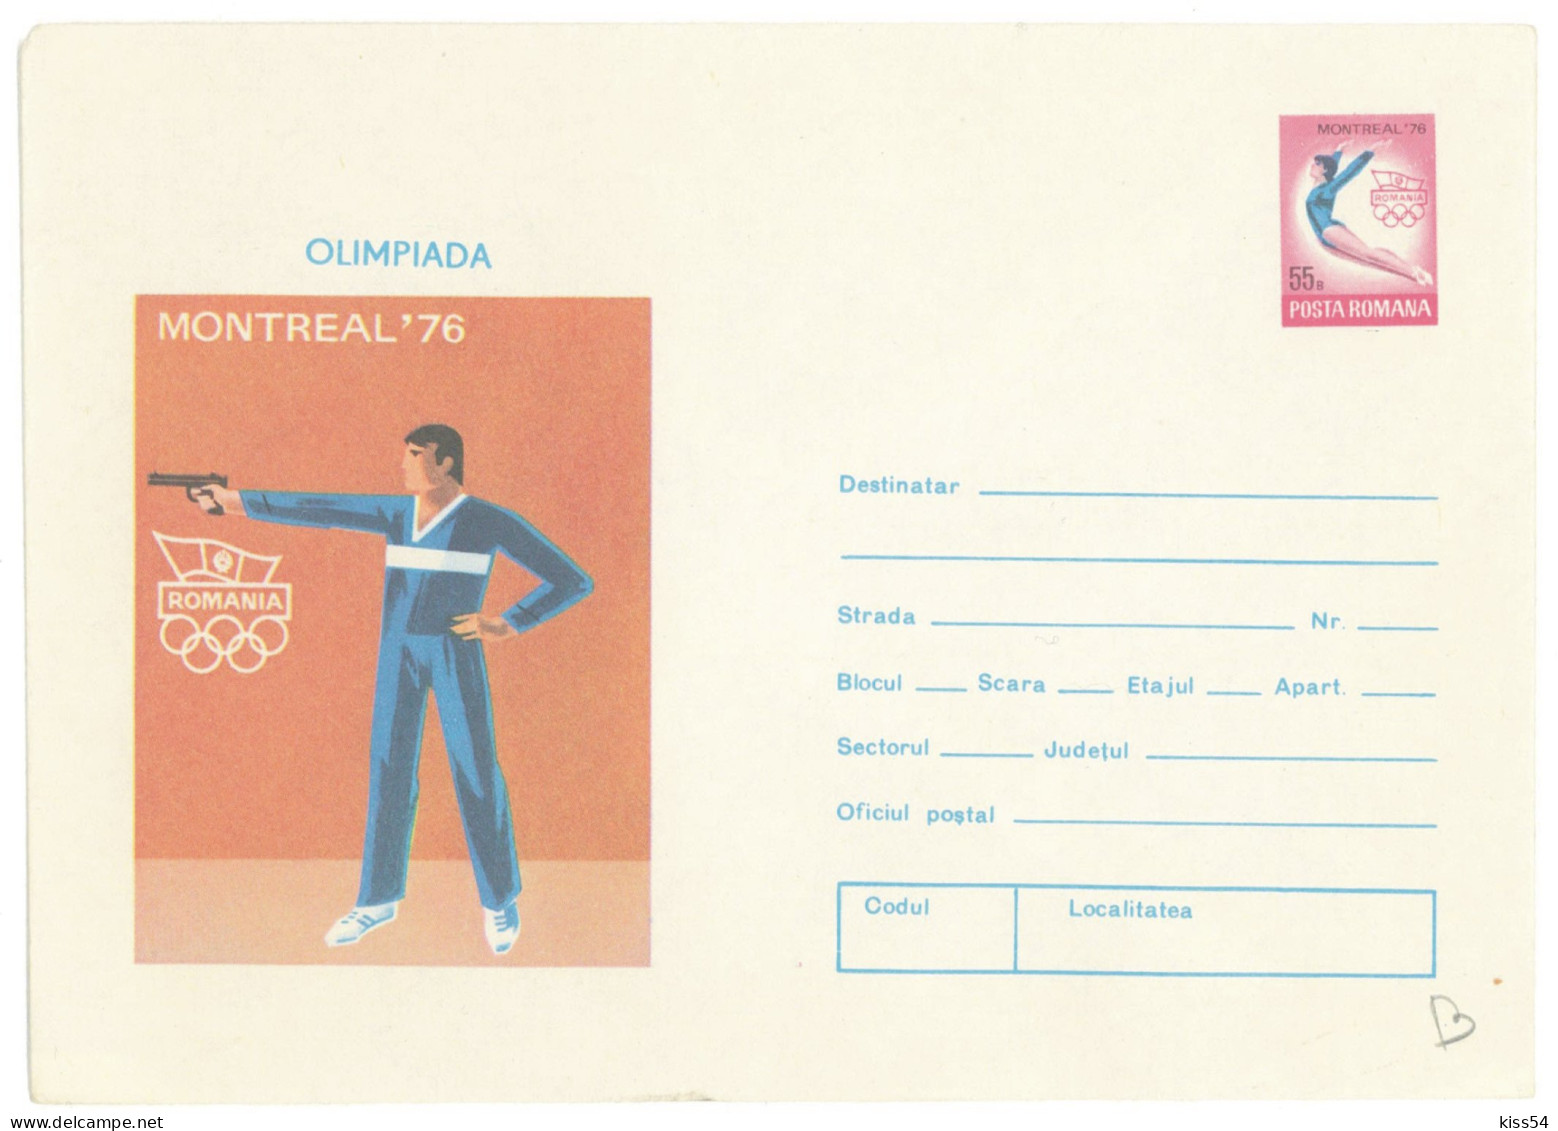 IP 76 - 128 SHOOT, GYMNASTICS, OLIMPIC GAMES, Montreal, Romania - Stationery - Unused - 1976 - Enteros Postales